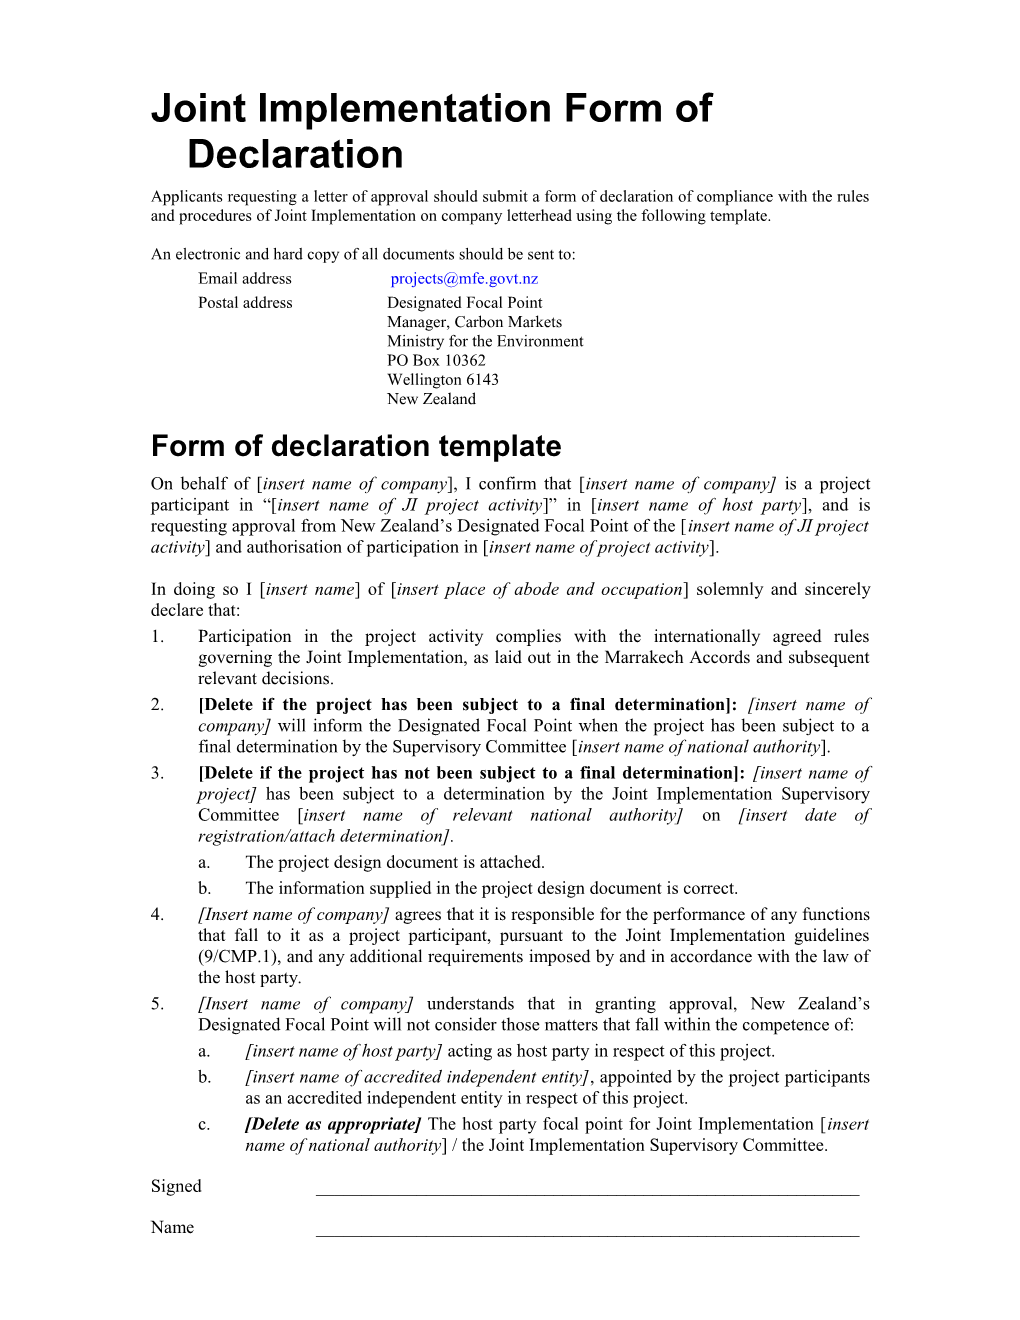 Joint Implementation Form of Declaration FINAL